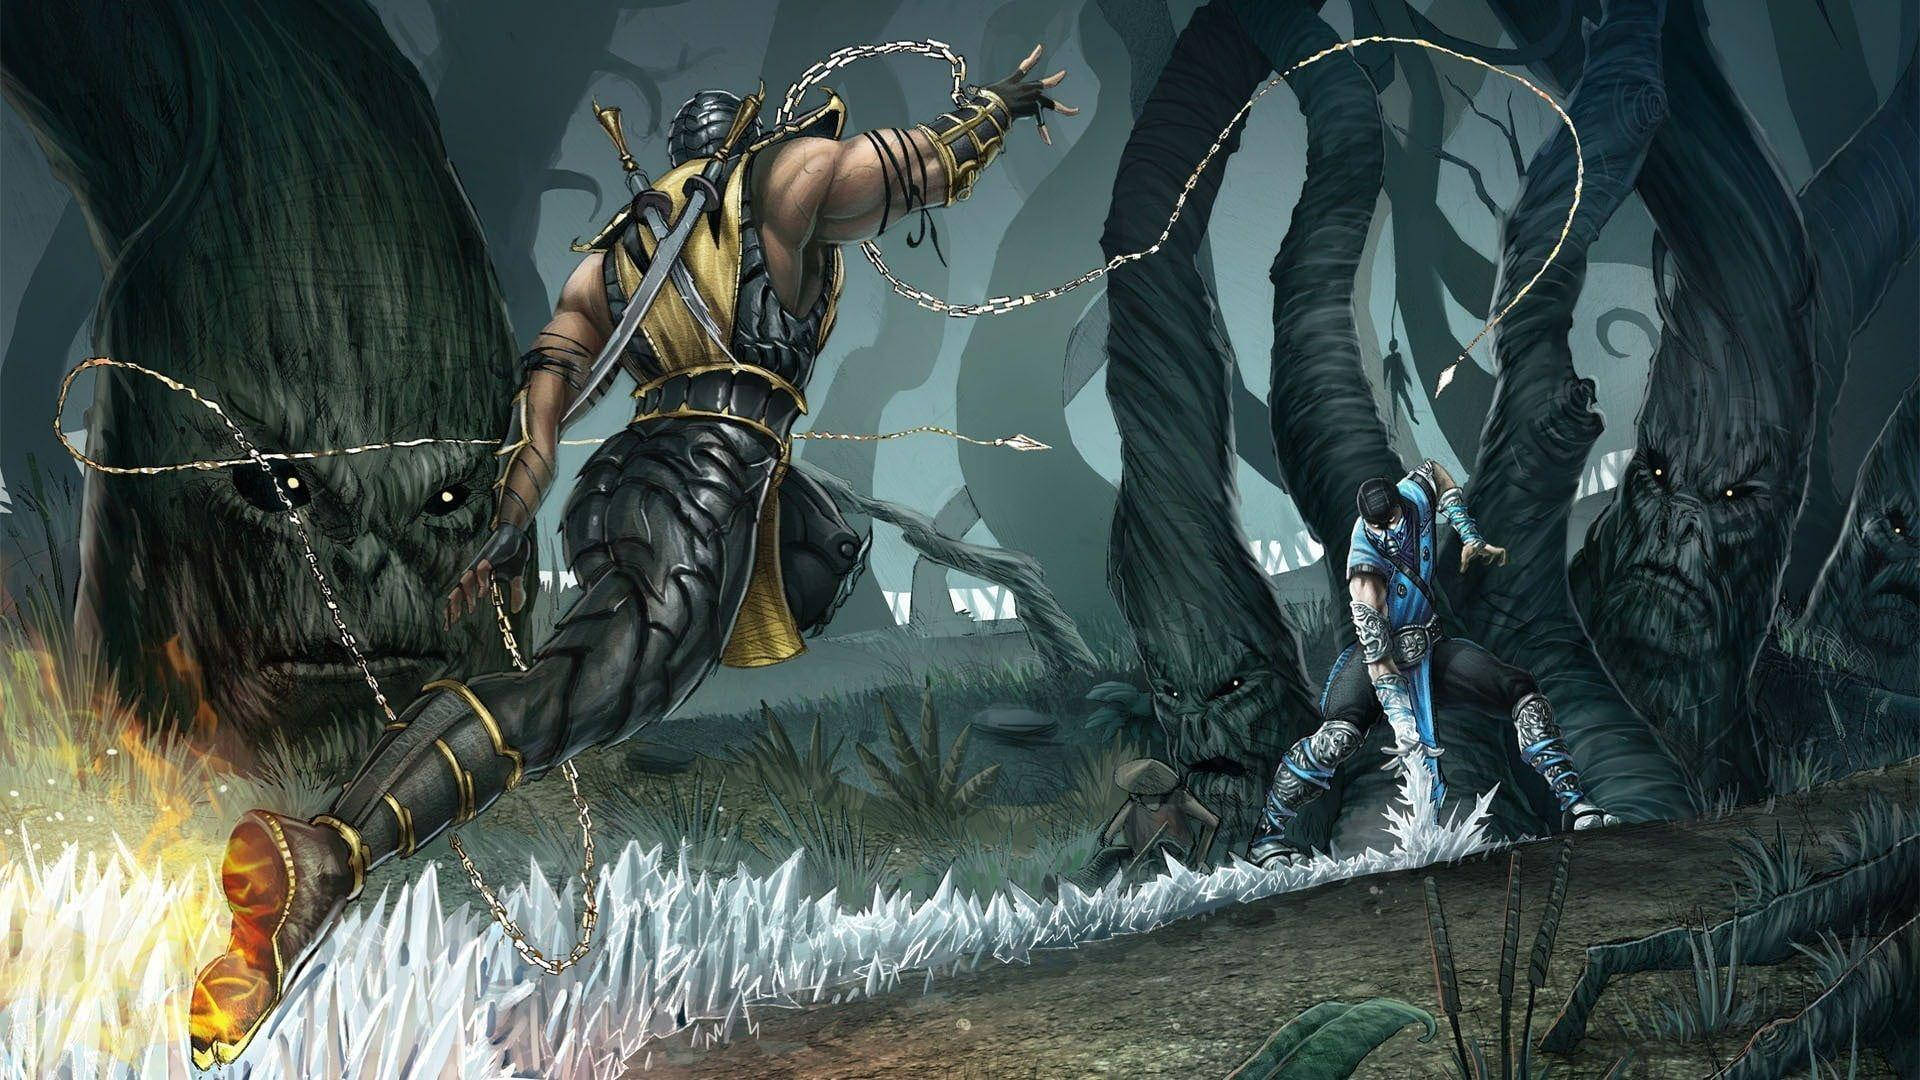 Mortal Kombat Scorpion Vs Sub Zero In Forest Wallpaper